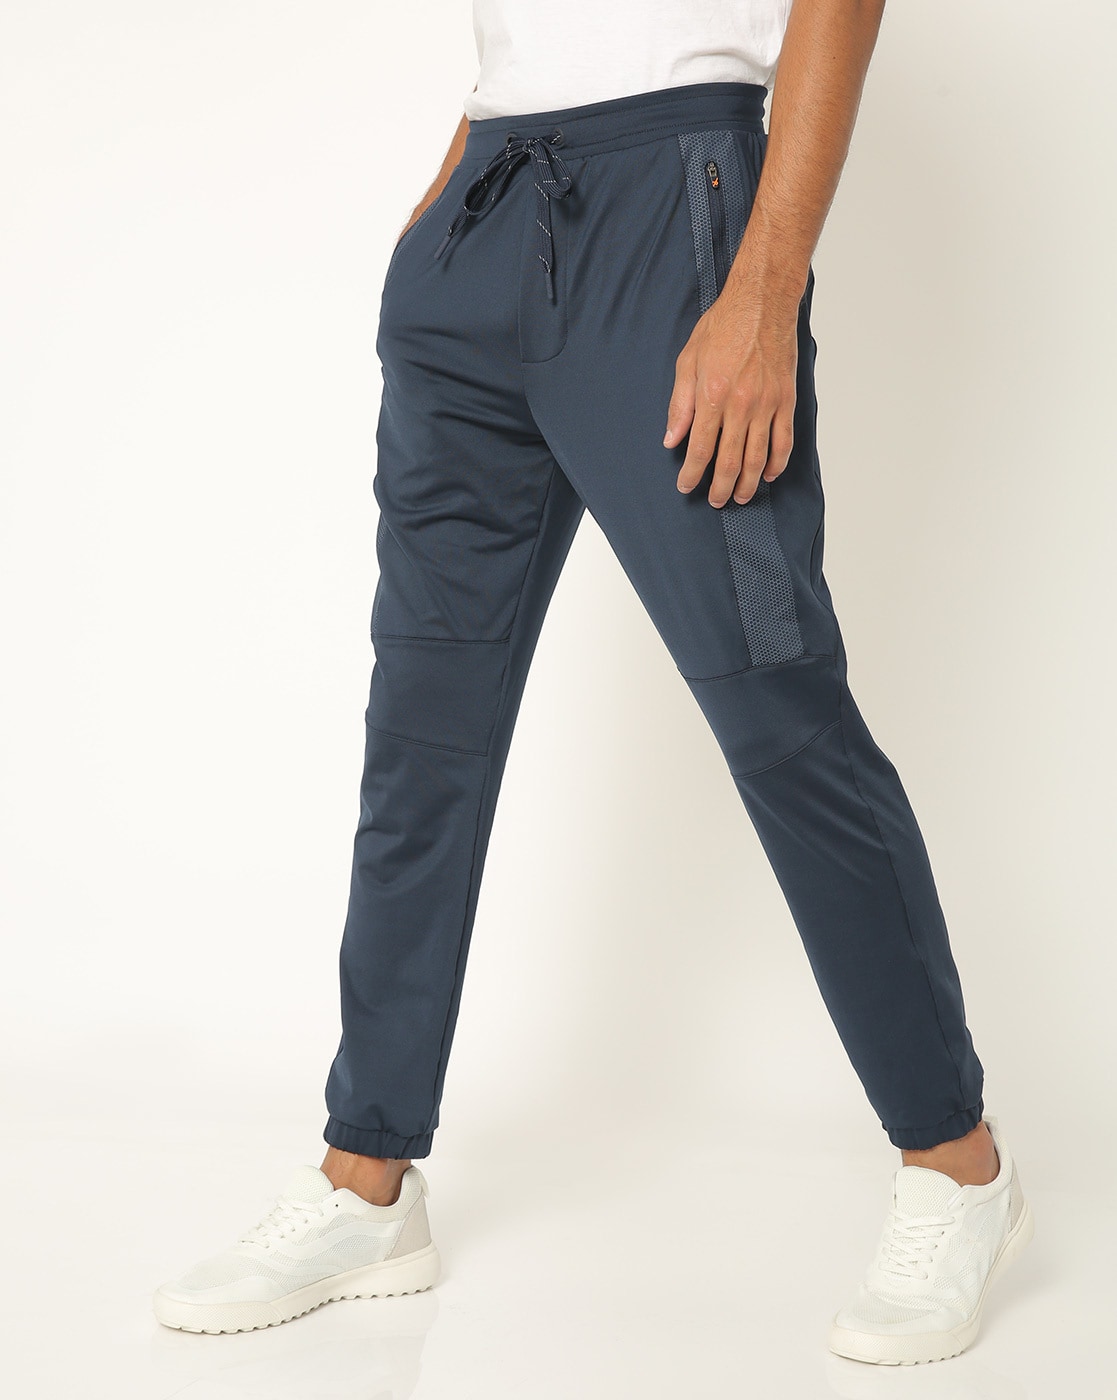 Buy Jockey Easy Movement Track pants  Charcoal Melange at Rs999 online   Activewear online